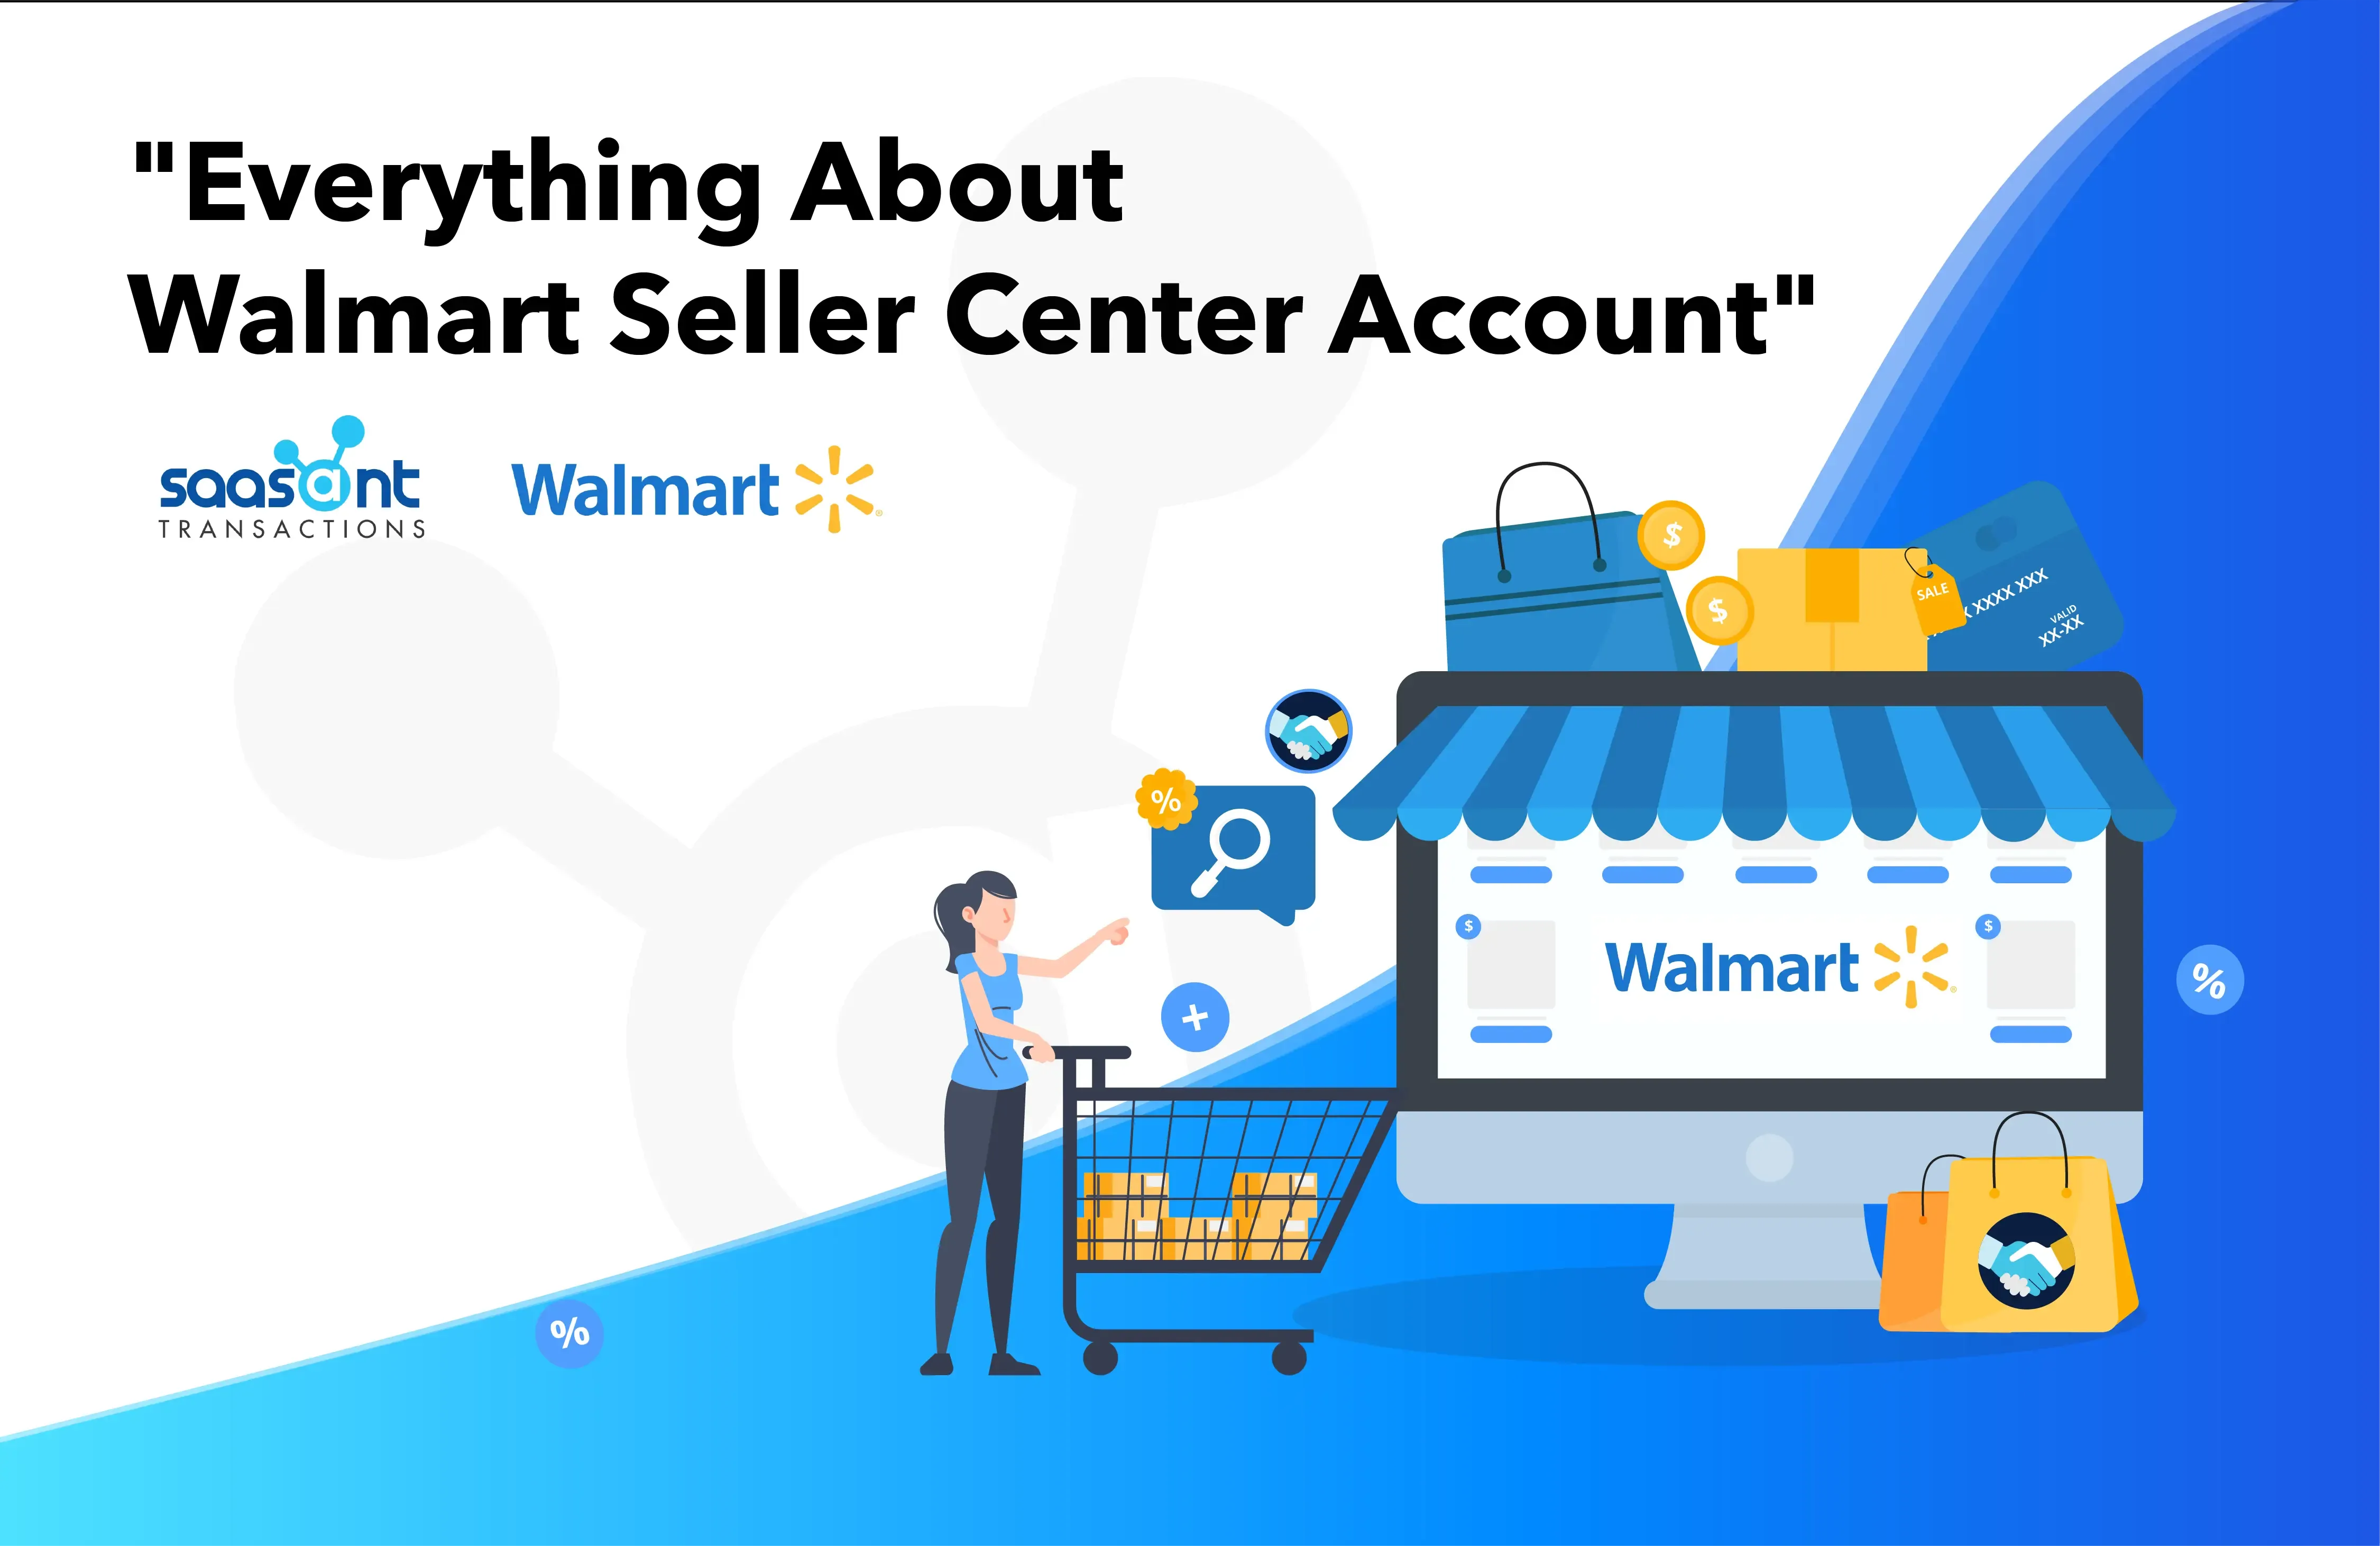 How to create a Walmart Seller Center Account?